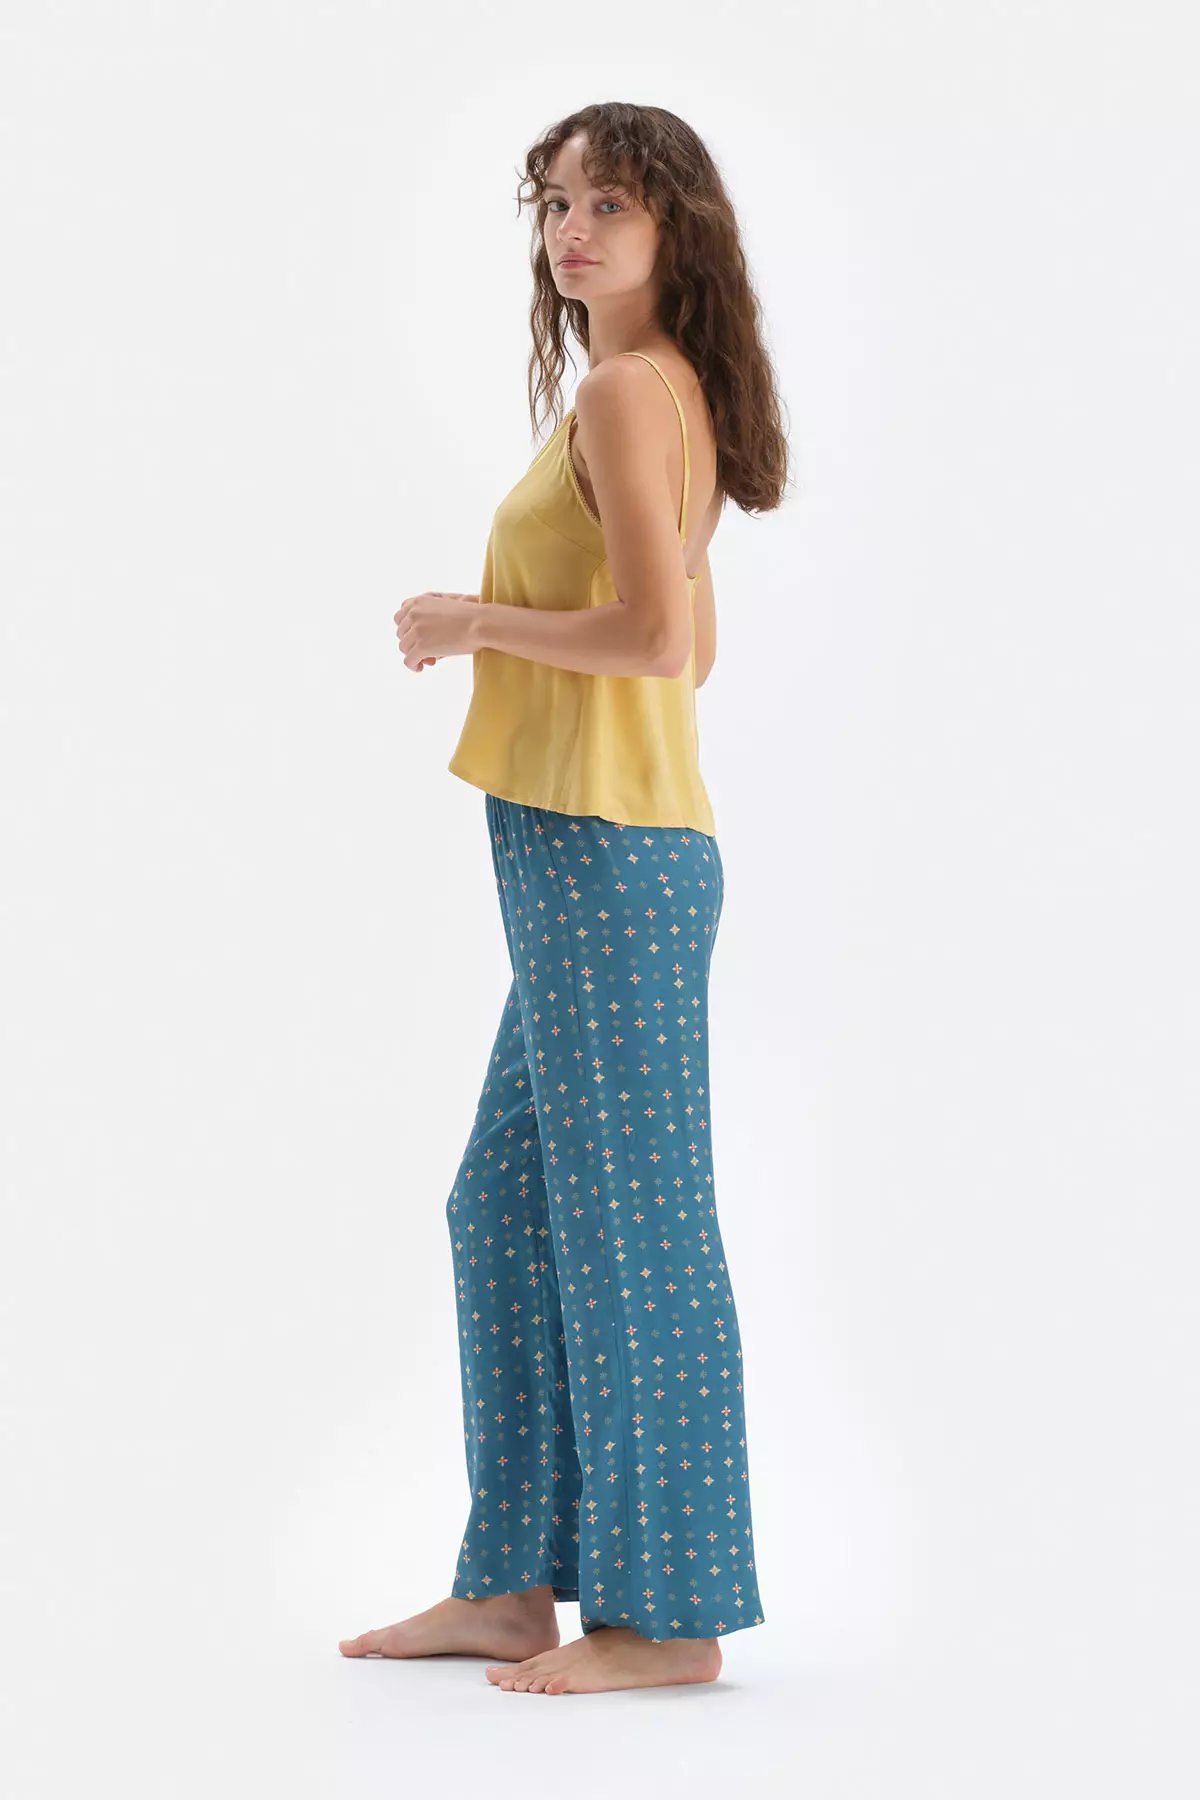 Mustard Pyjama Set, Thin Straps, V-Neck, Geometric Printed, Regular Fit, Sleeveless Homewear And Sleepwear for Women